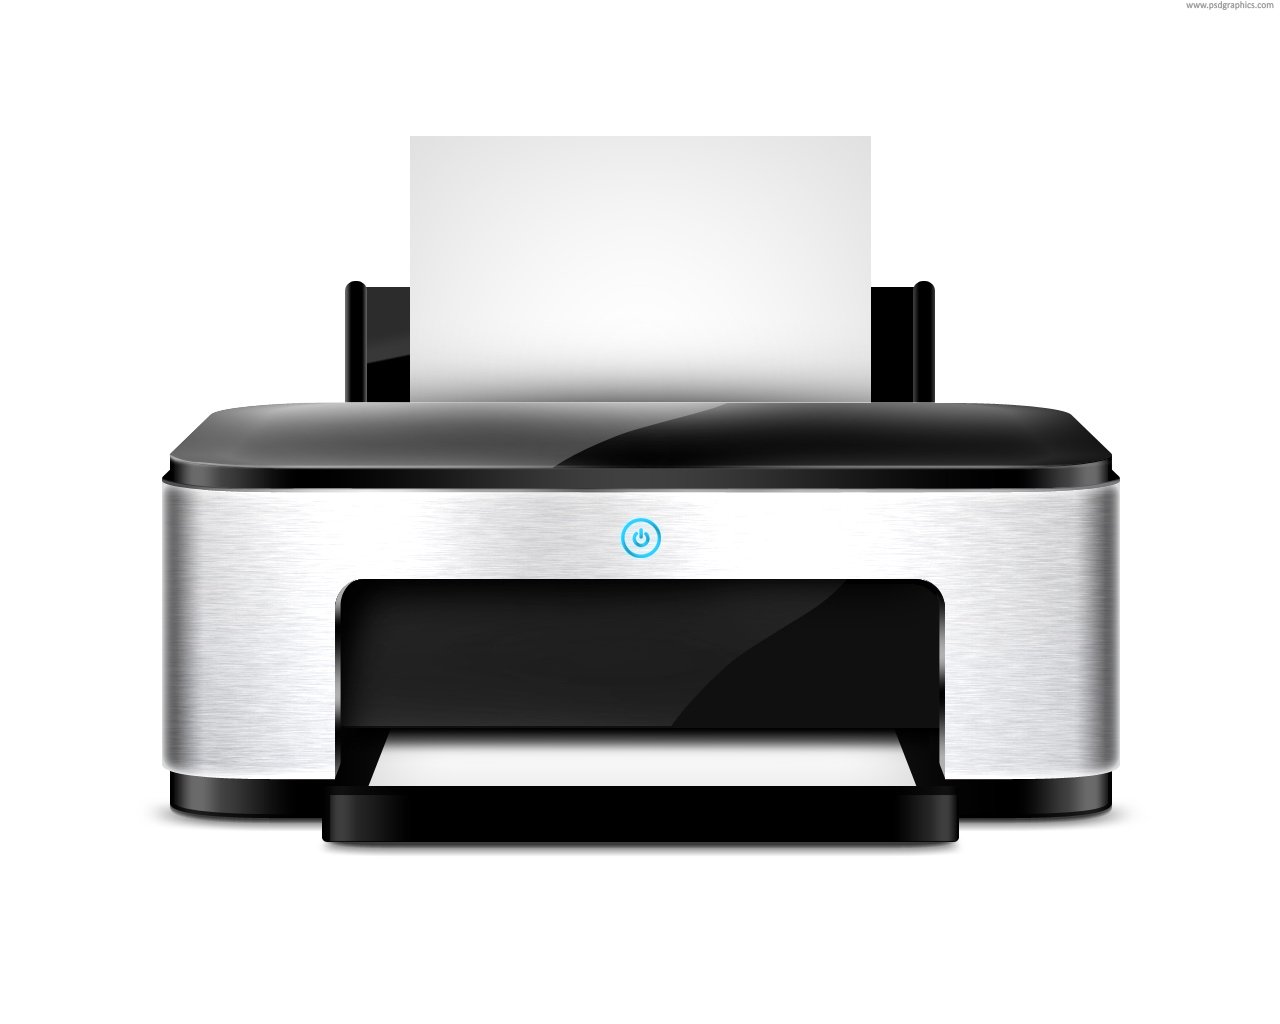 printer-icon.jpg